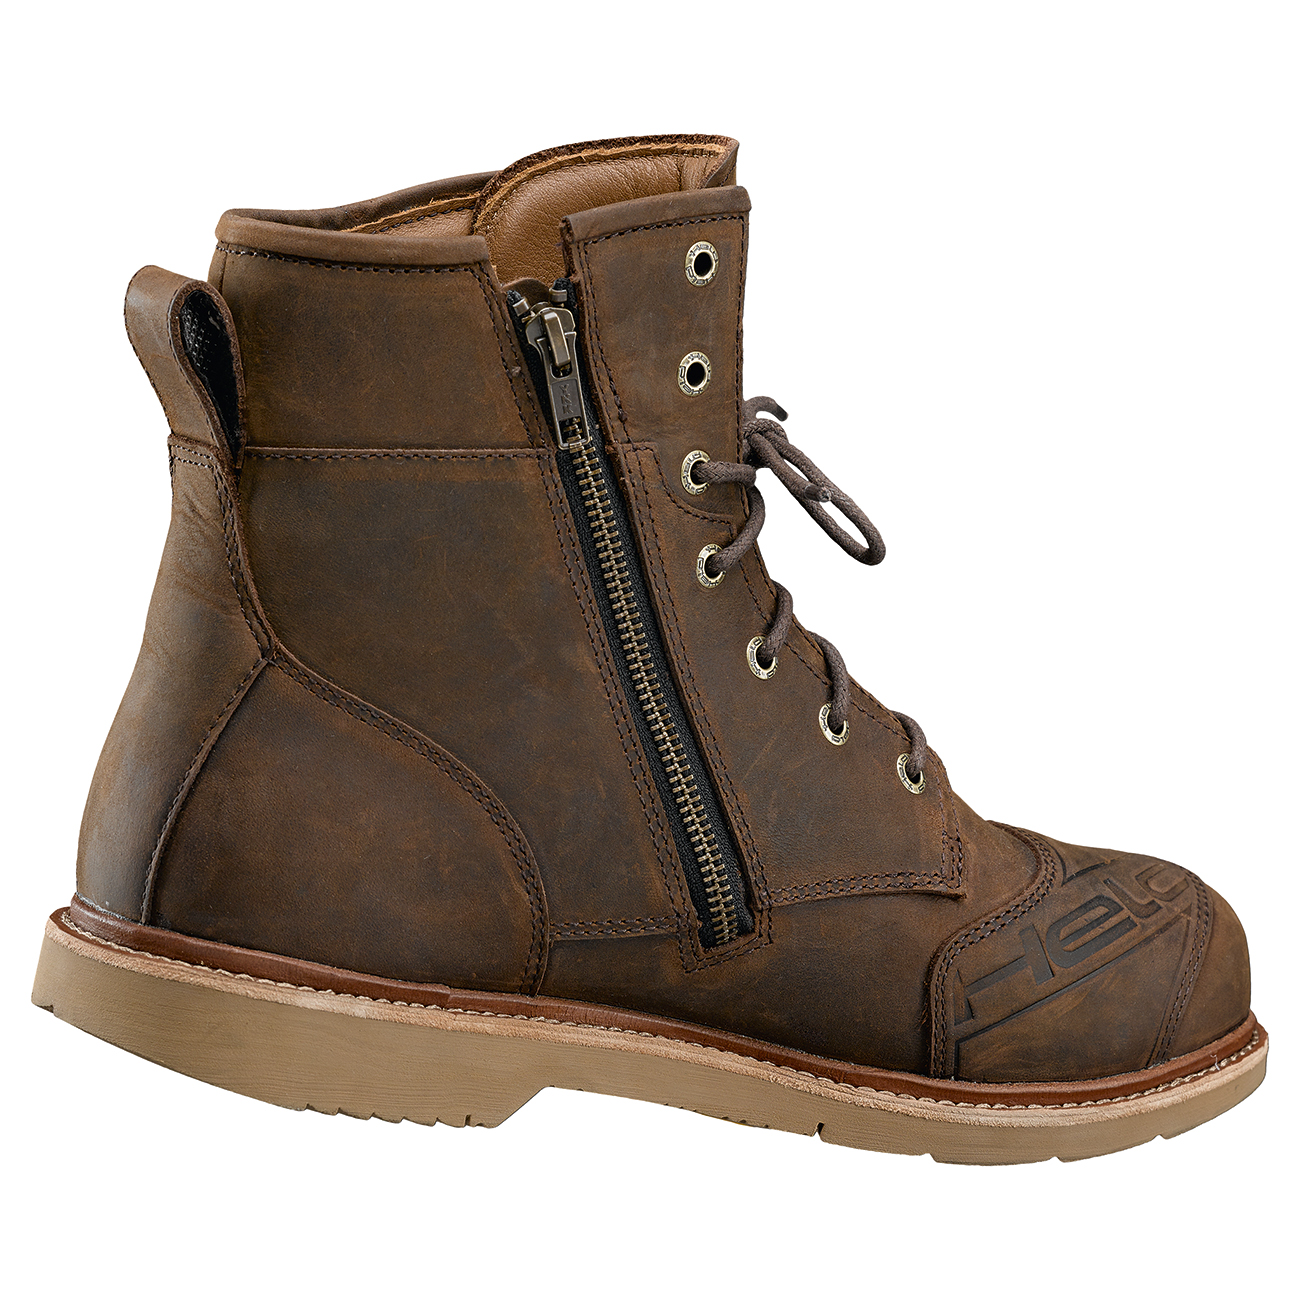 Saxton Gore-Tex boots